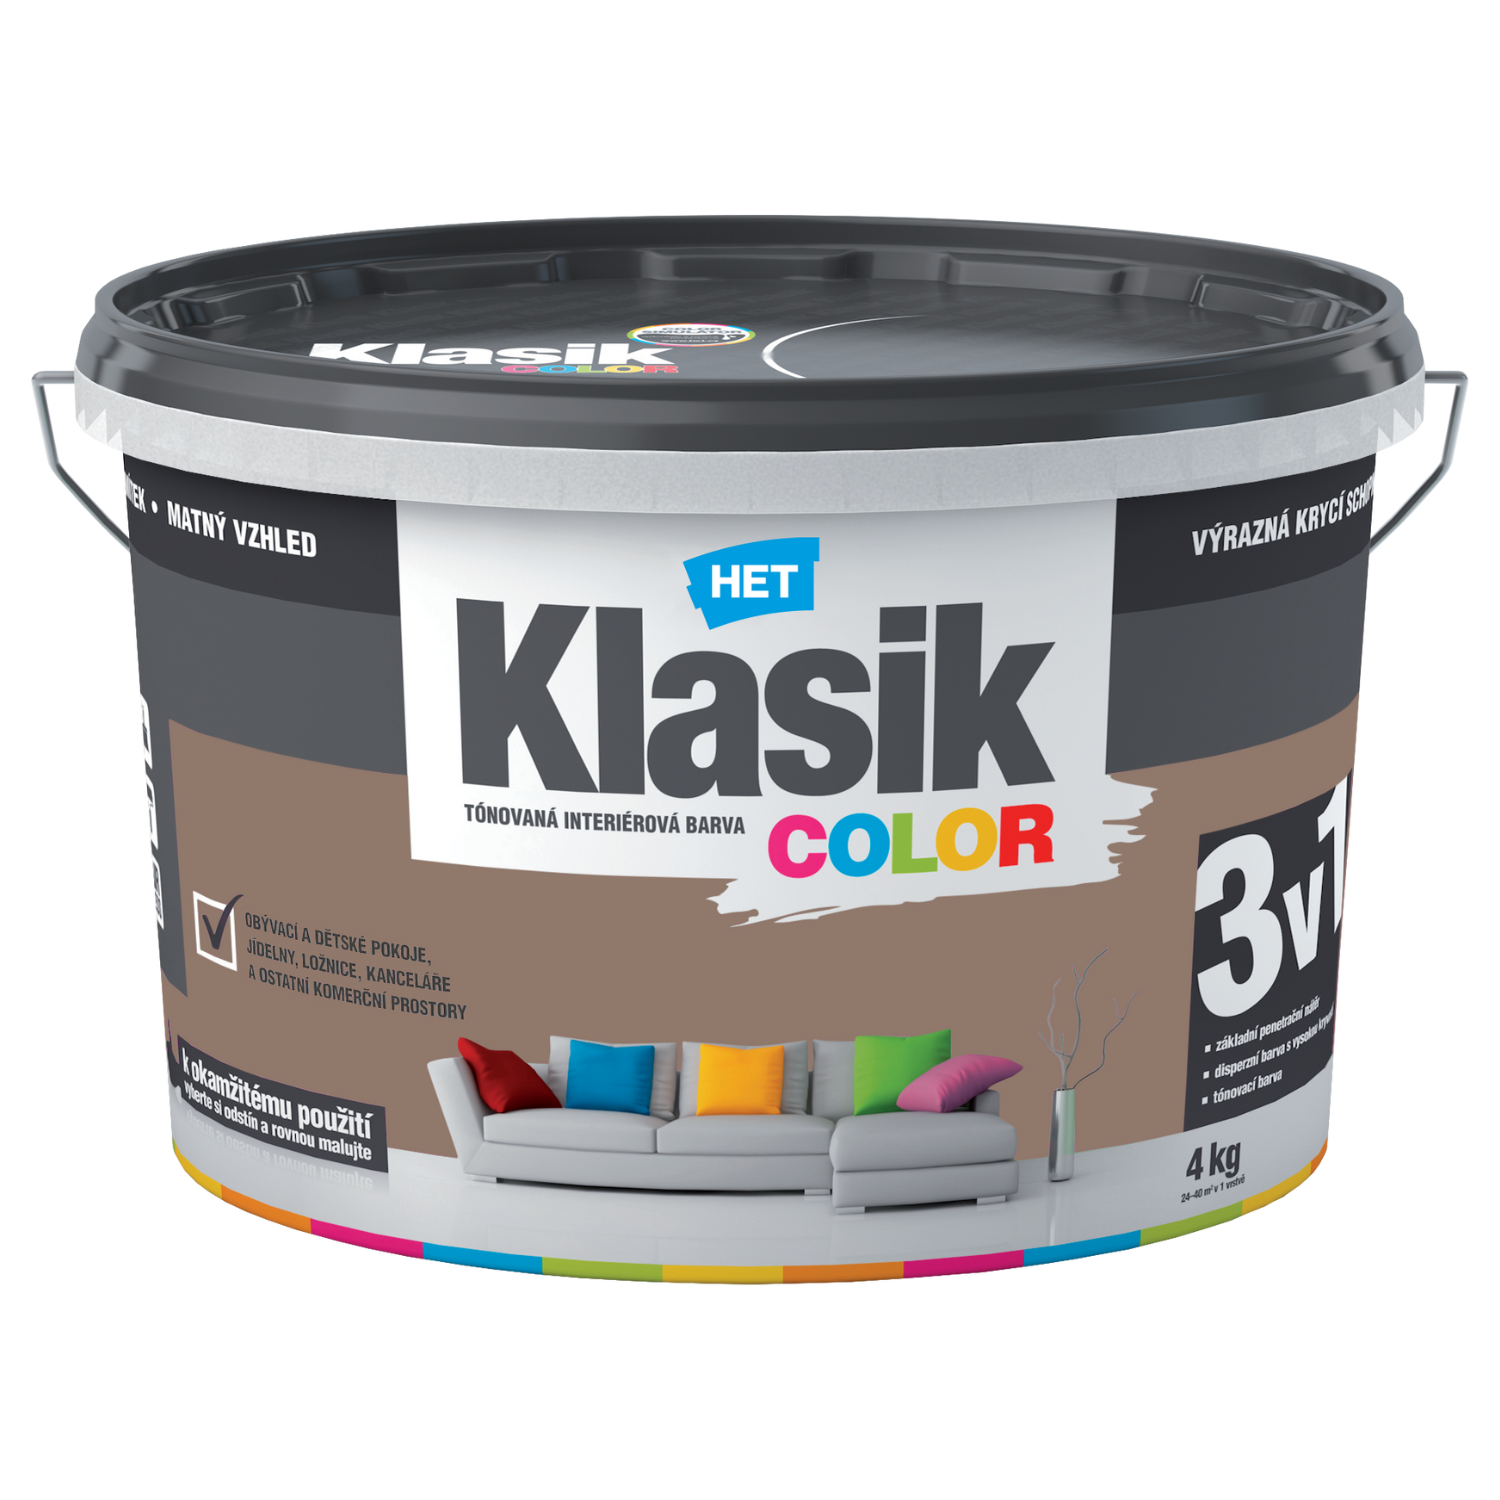 HET Klasik COLOR tónovaná interiérová akrylátová disperzná oteruvzdorná farba 4 kg, KC0277 - hnedý čokoládový